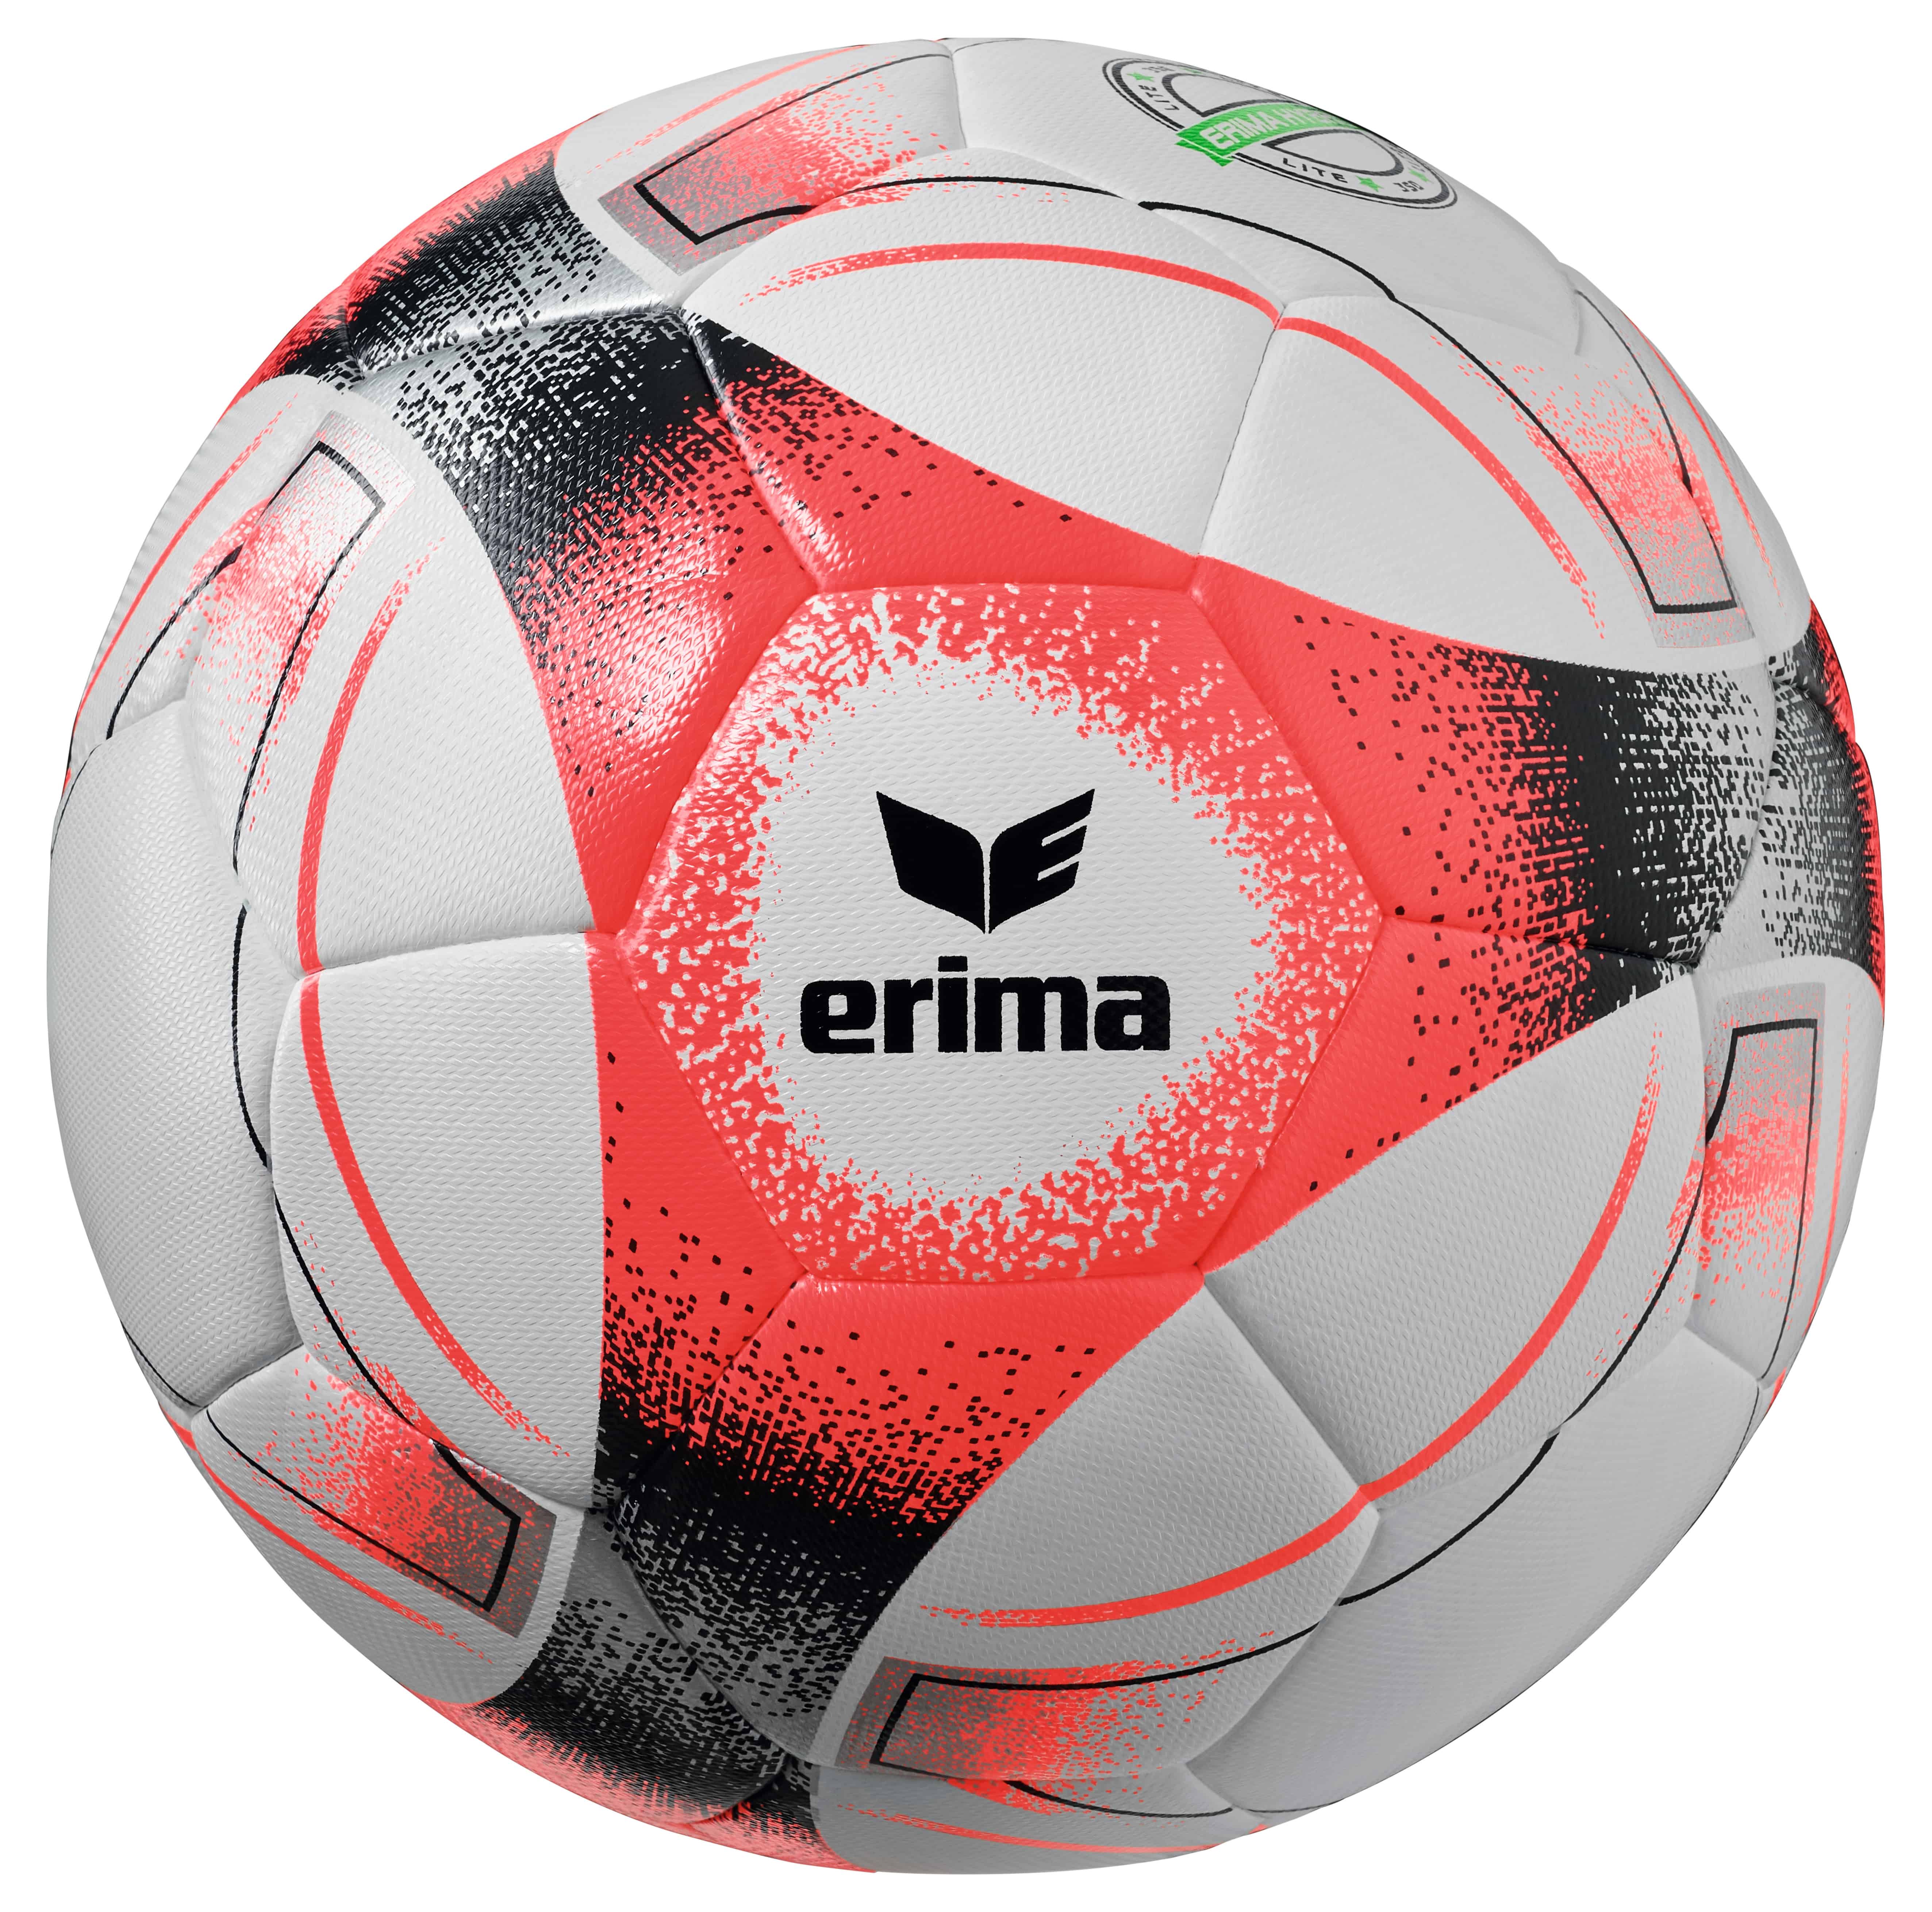 Erima Fußball Hybrid Training Lite 350 rot